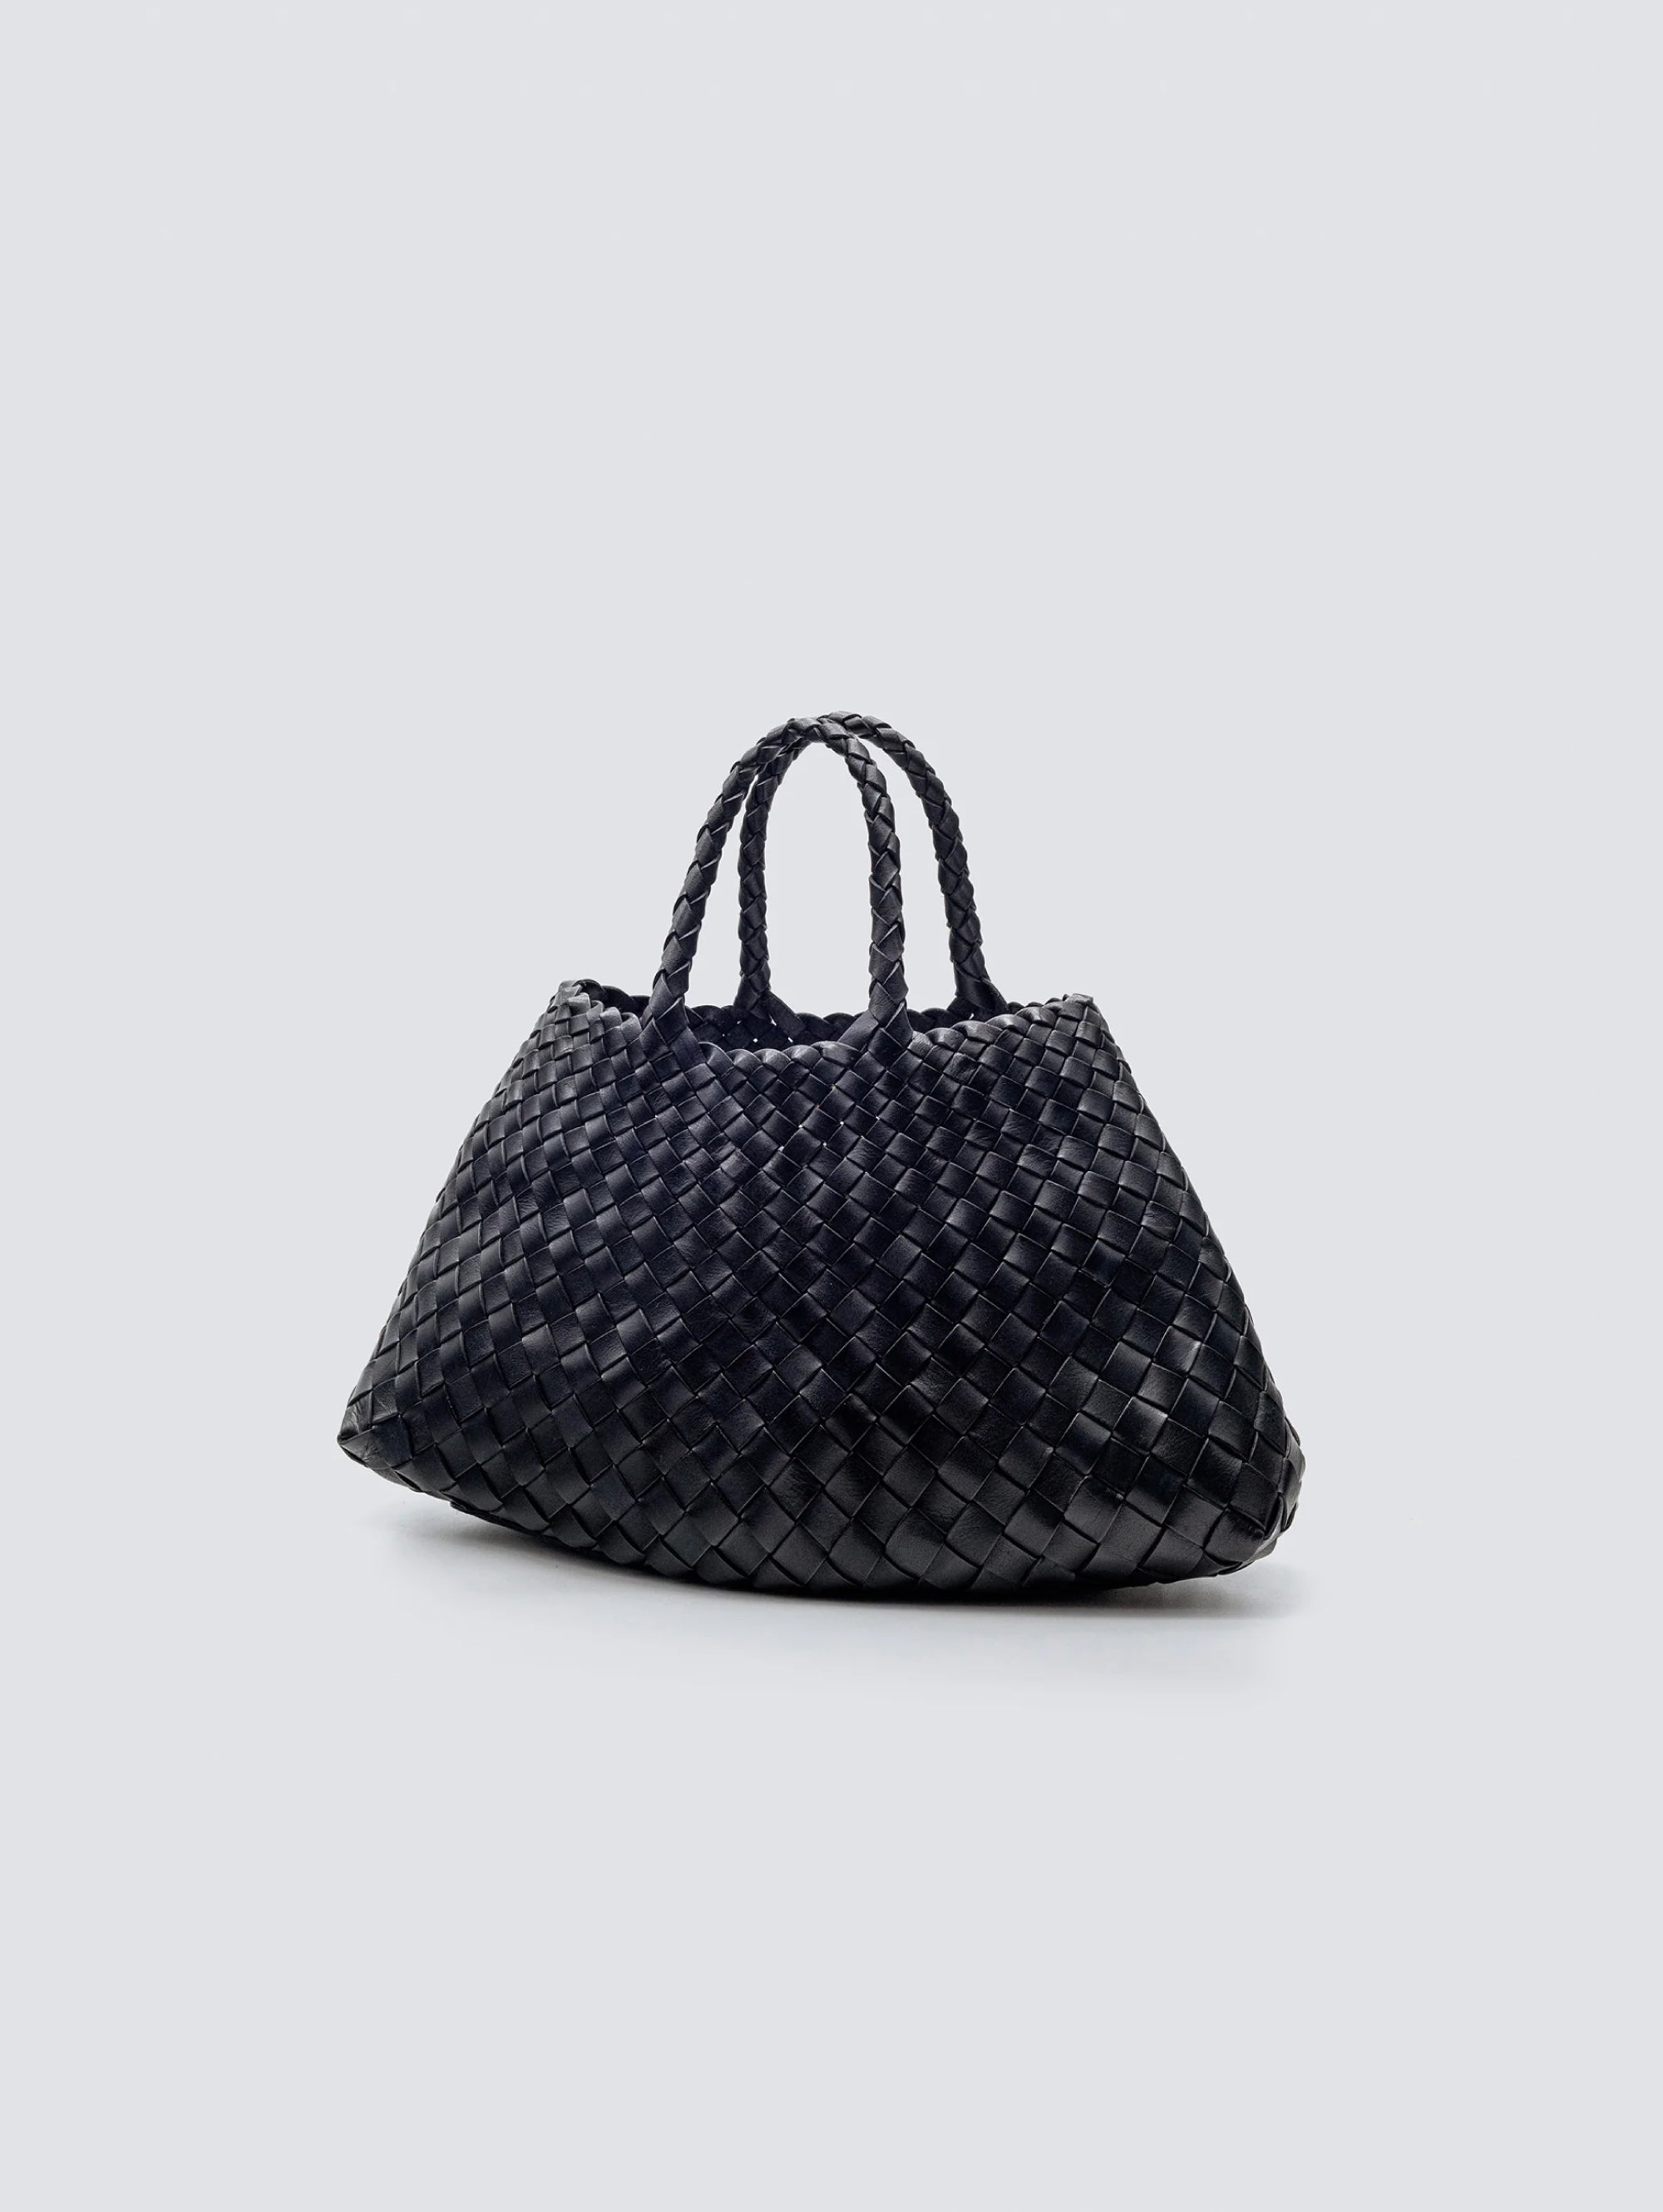 Santa Croce Small Black Woven Leather Handbag